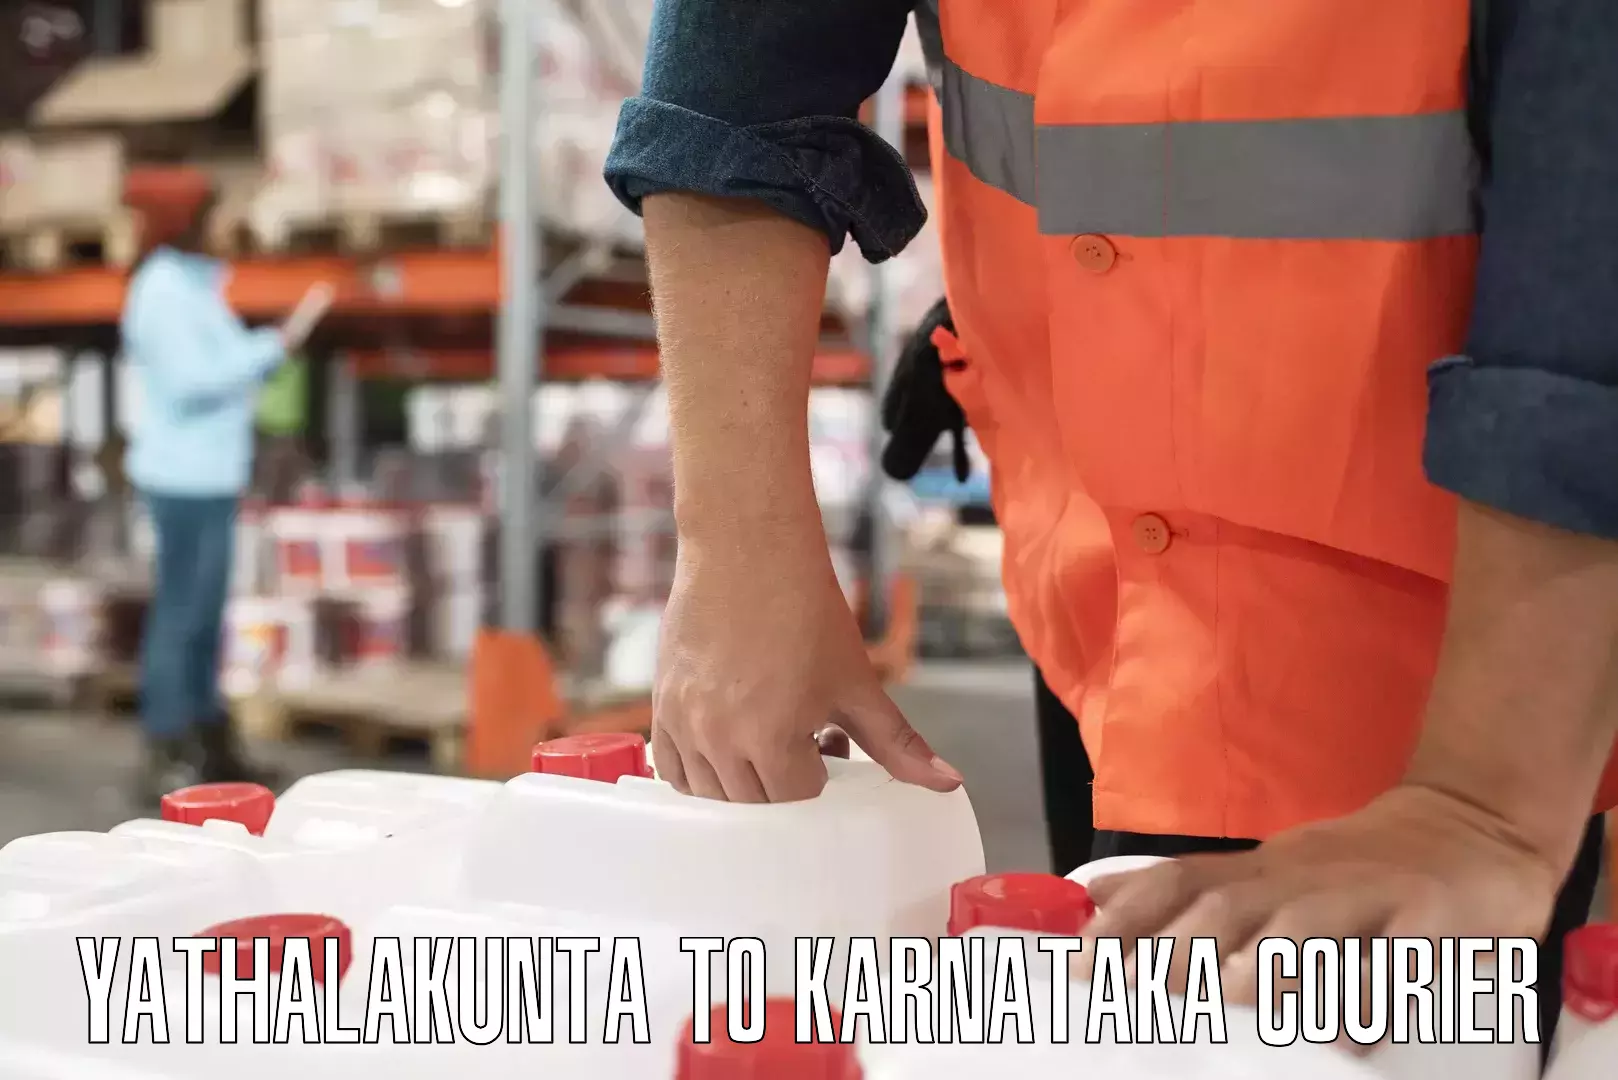 Specialized shipment handling Yathalakunta to Tikota